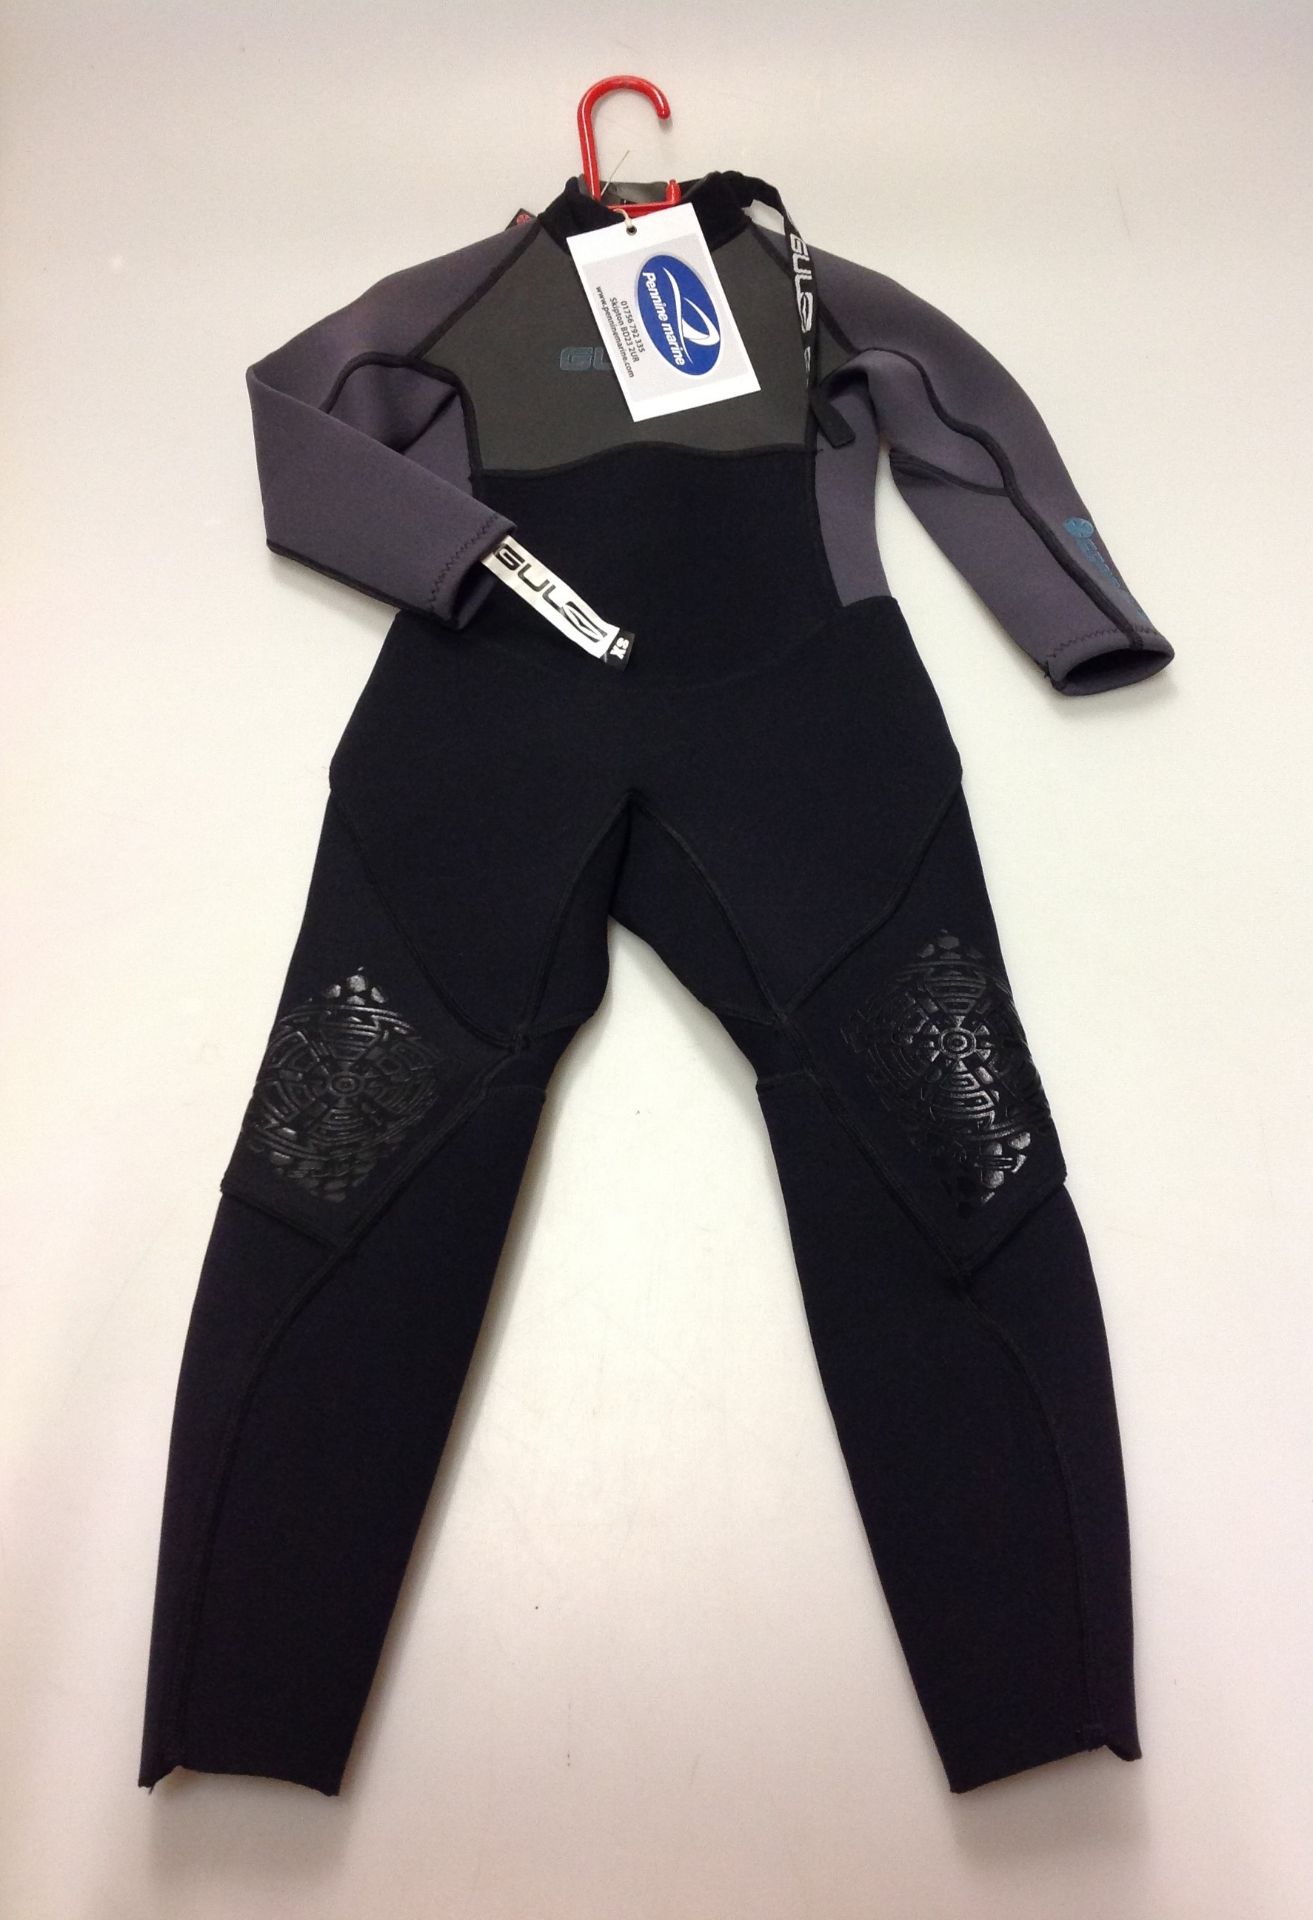 Gul Response wetsuit size JXXXS